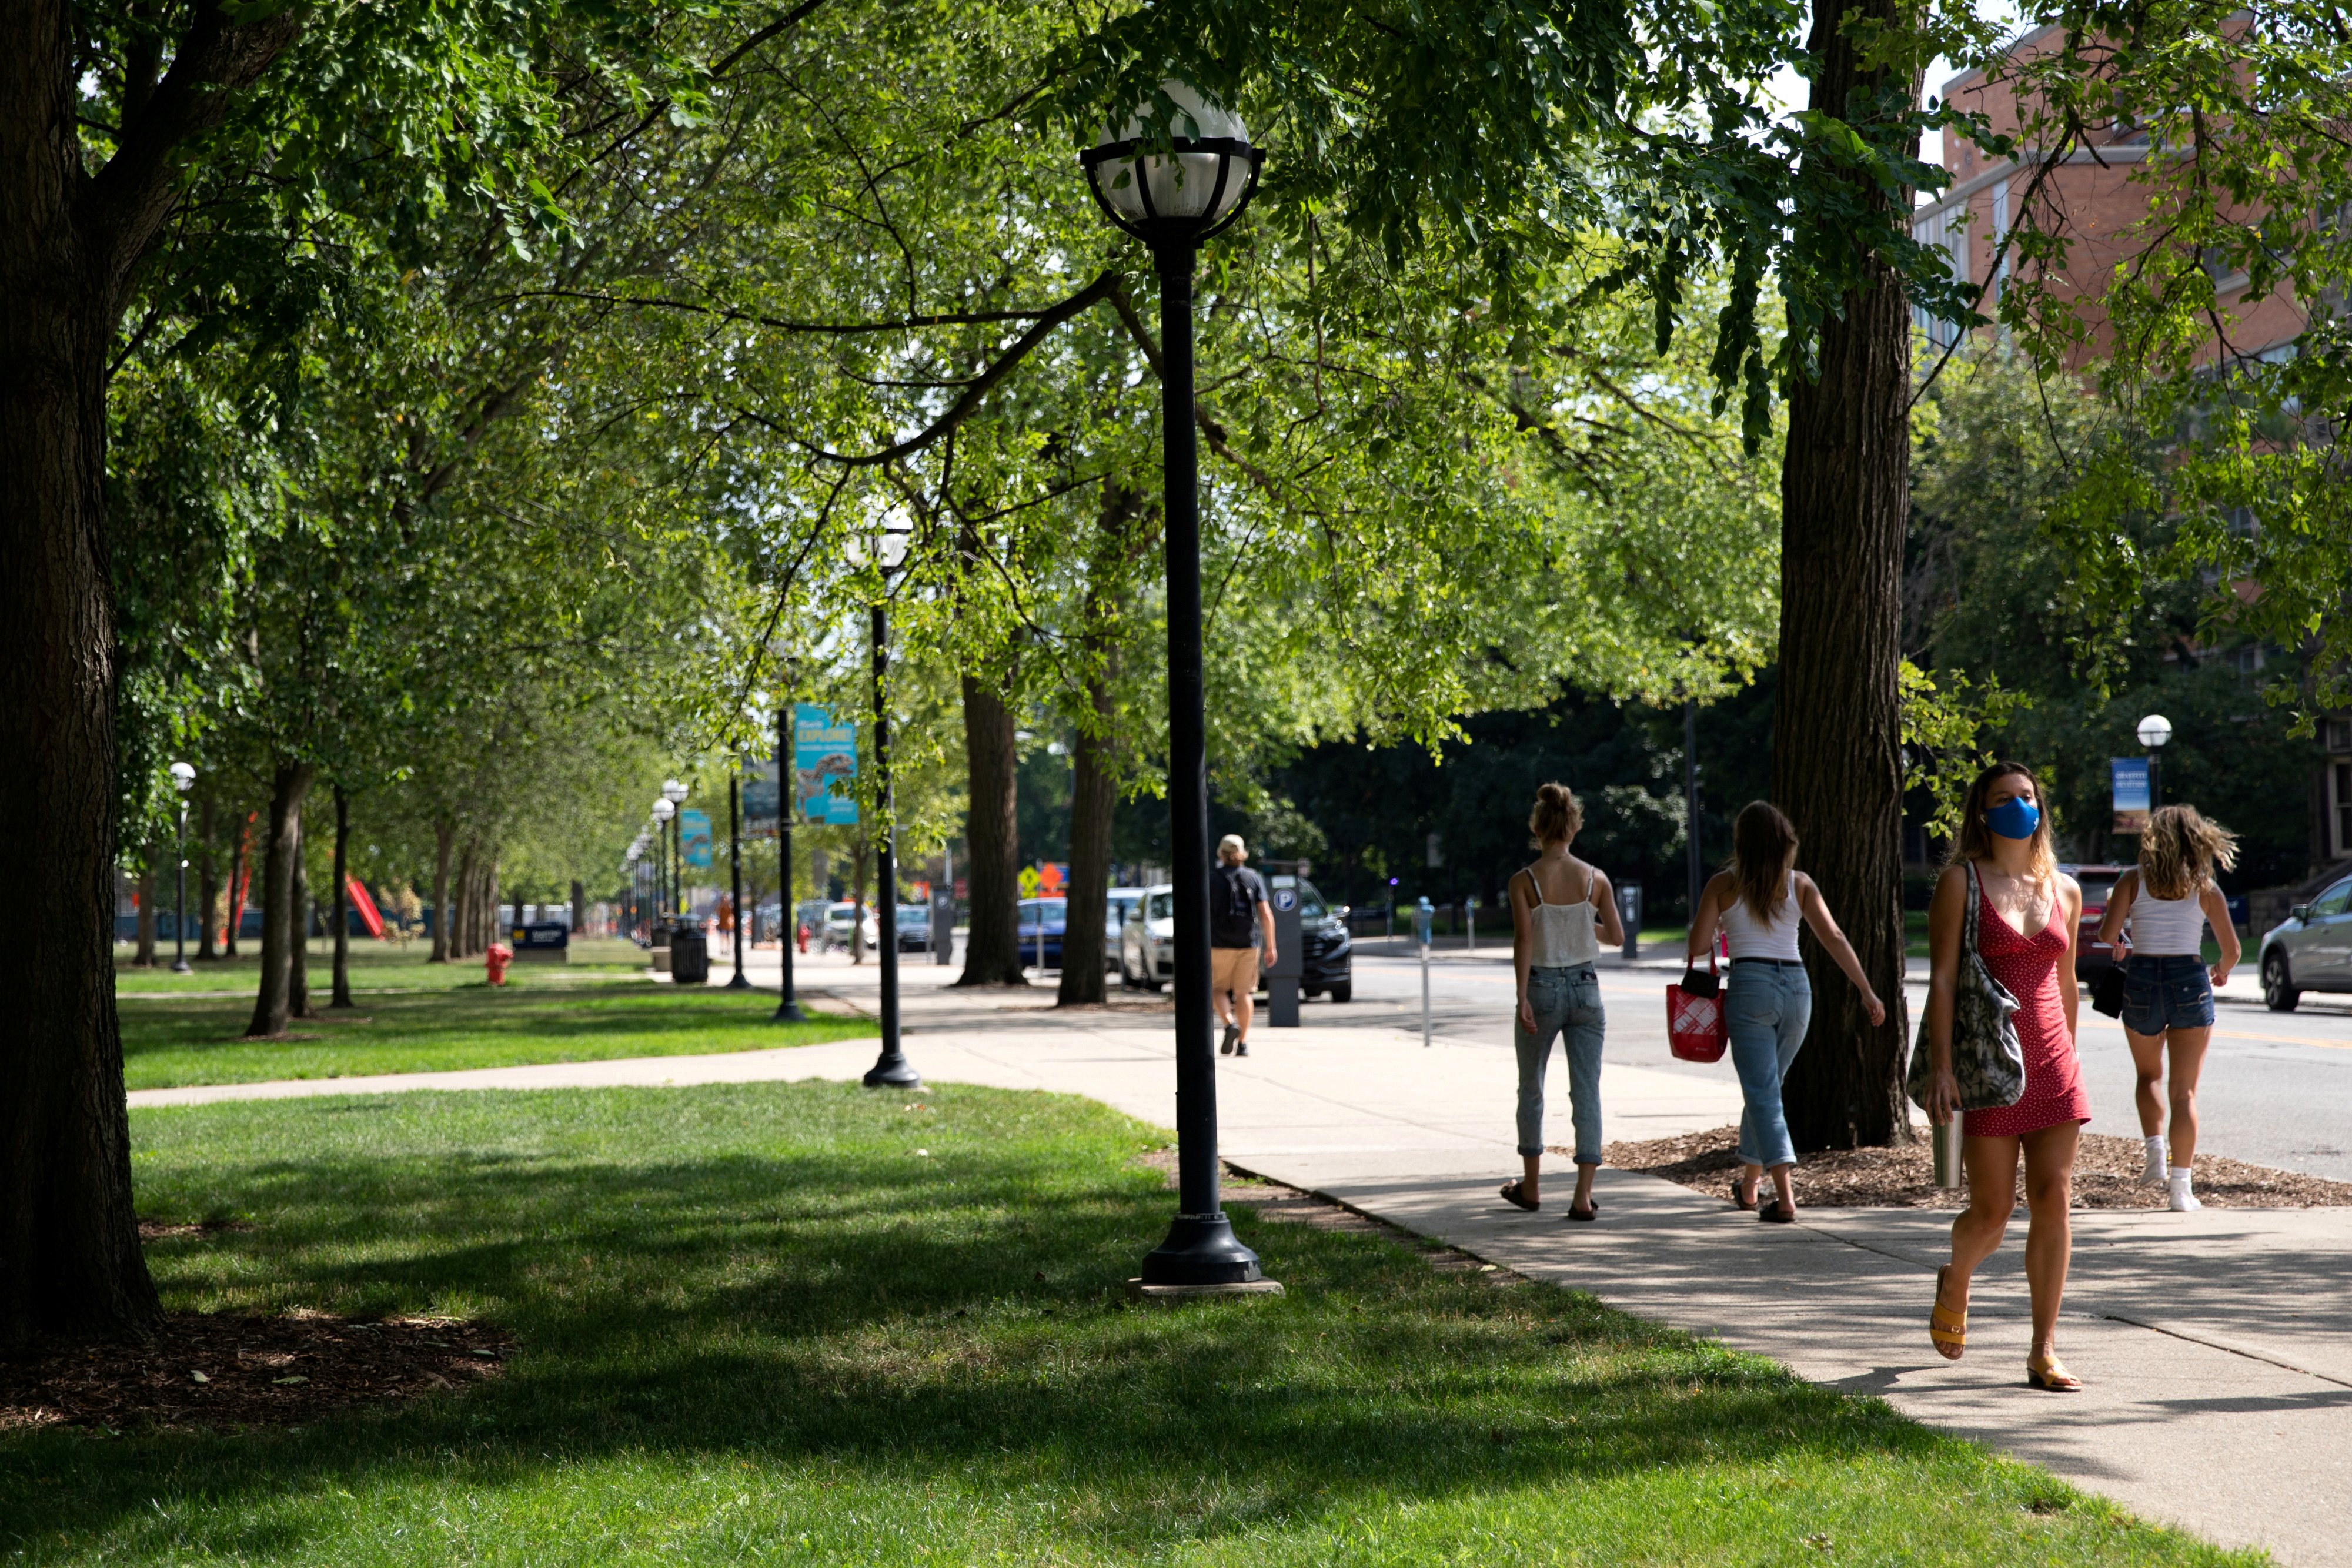 Students walk through the University of Michigan campus in Ann Arbor